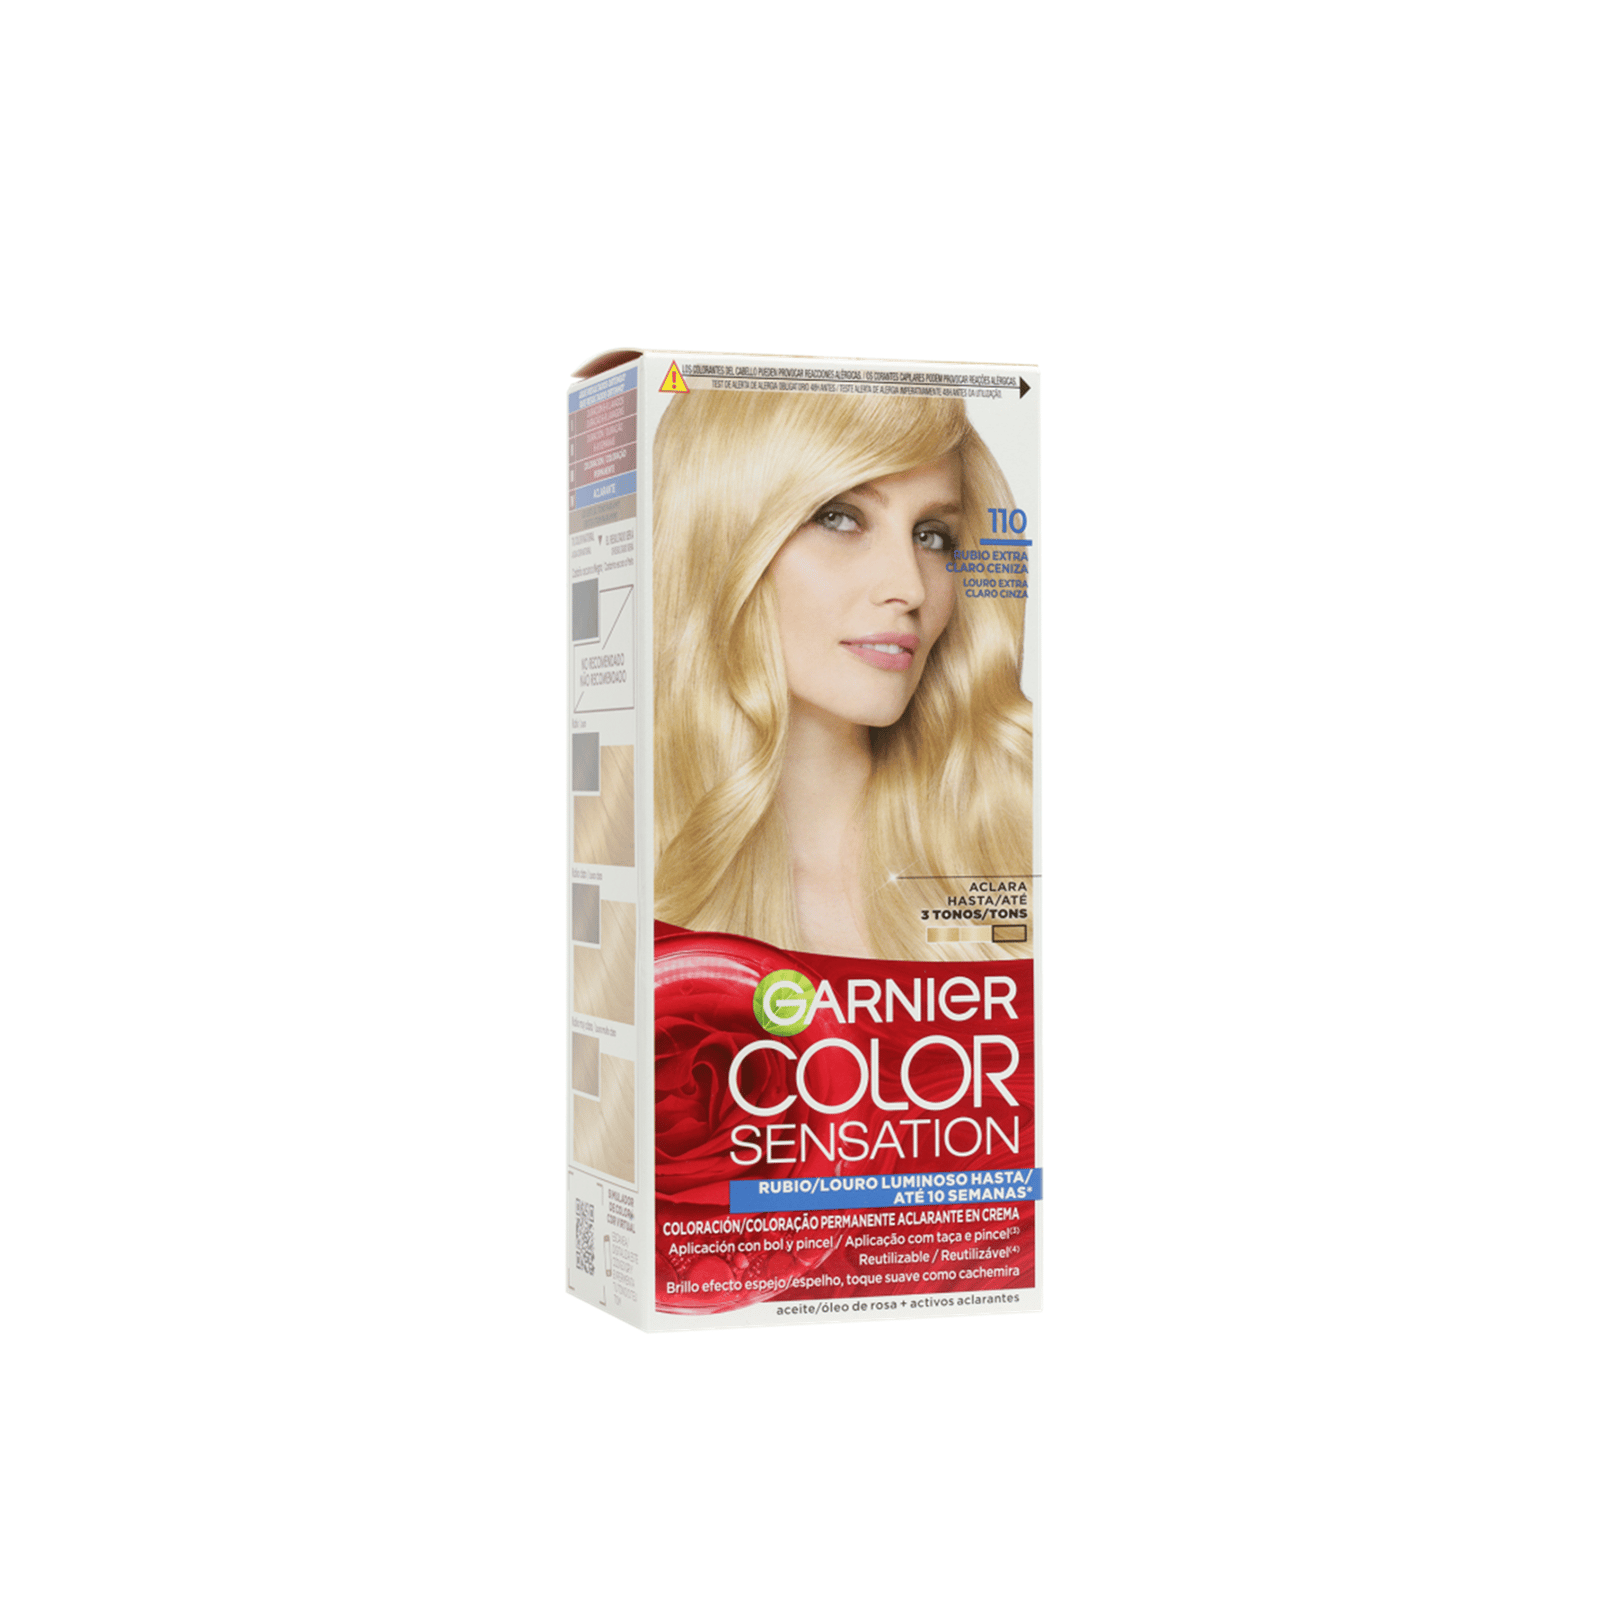 Garnier Color Sensation Permanent Hair Dye 110 Very Light Ash Blonde